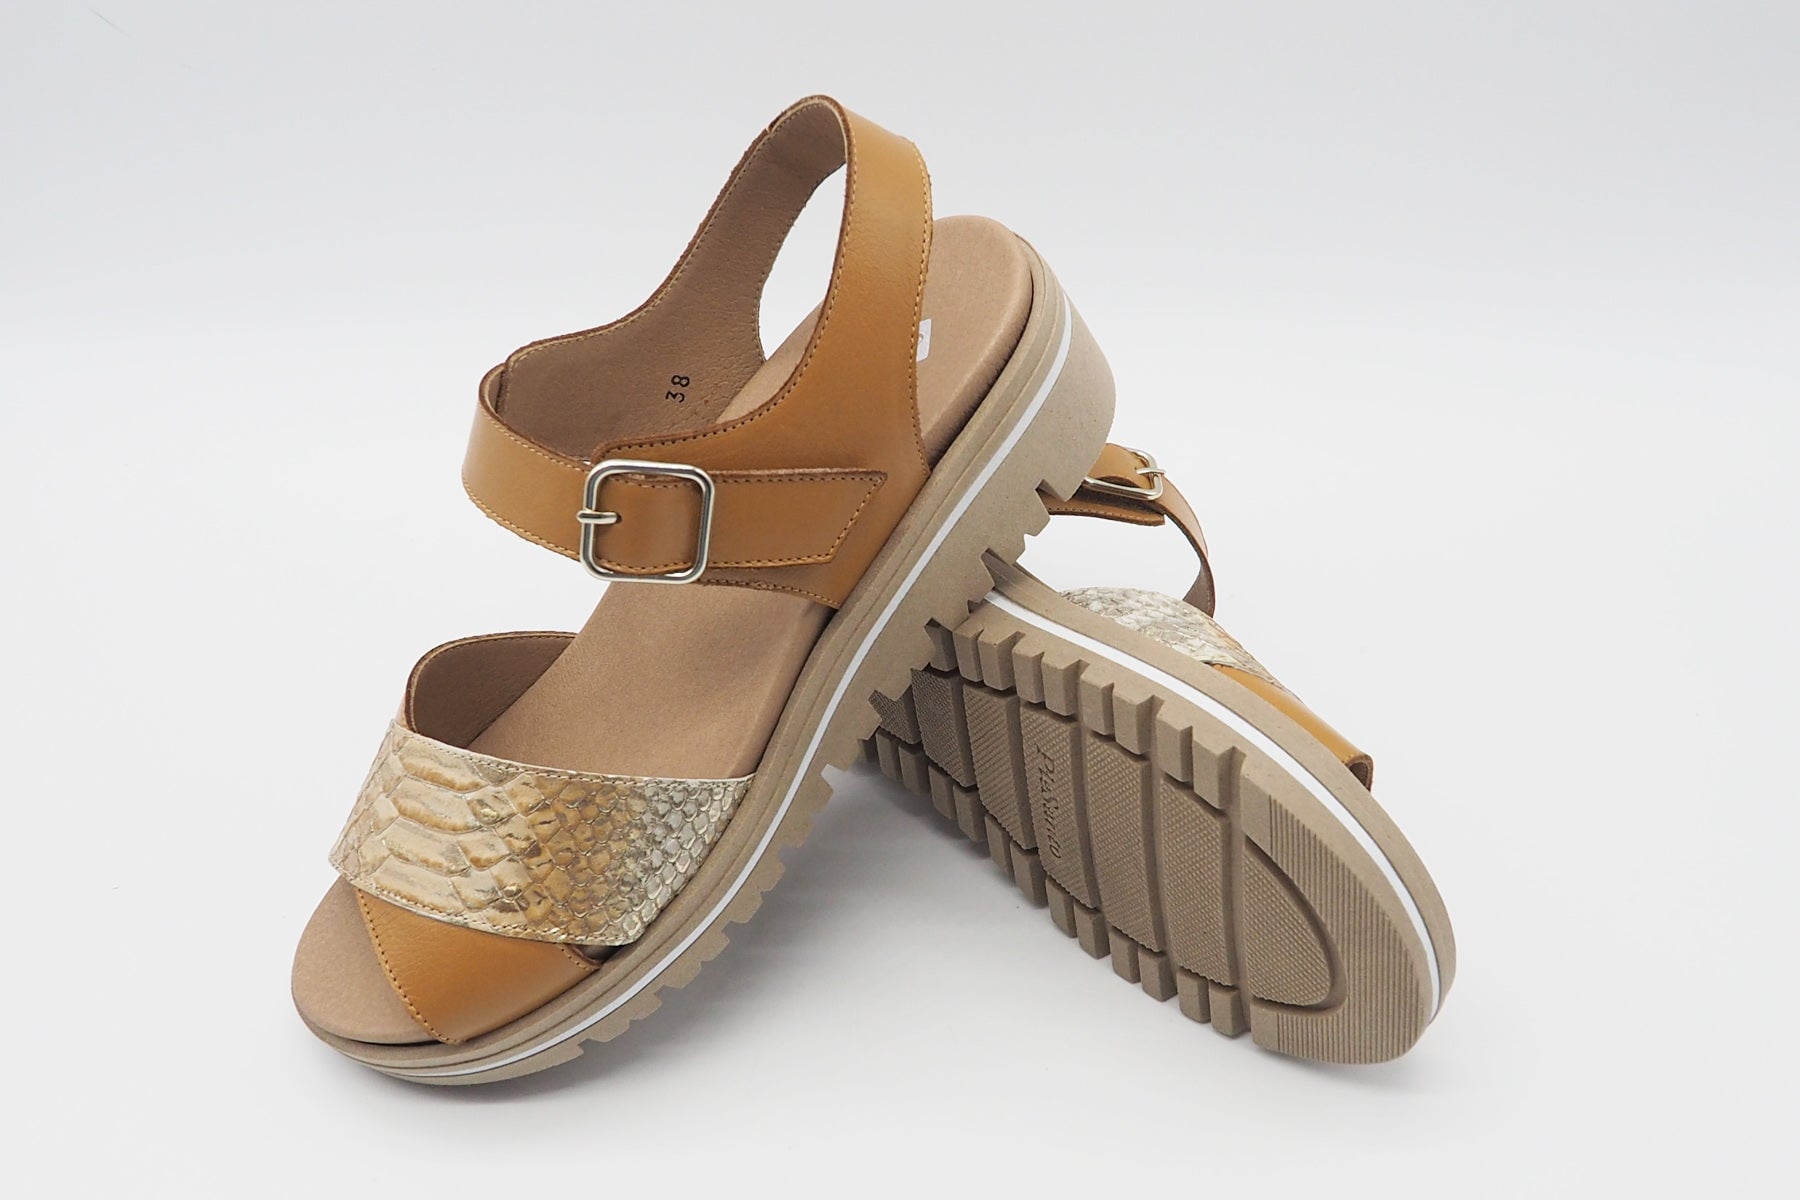 Damen Sandale aus Leder in Hellbraun - Absatz 3cm Damen Sandalen PieSanto 